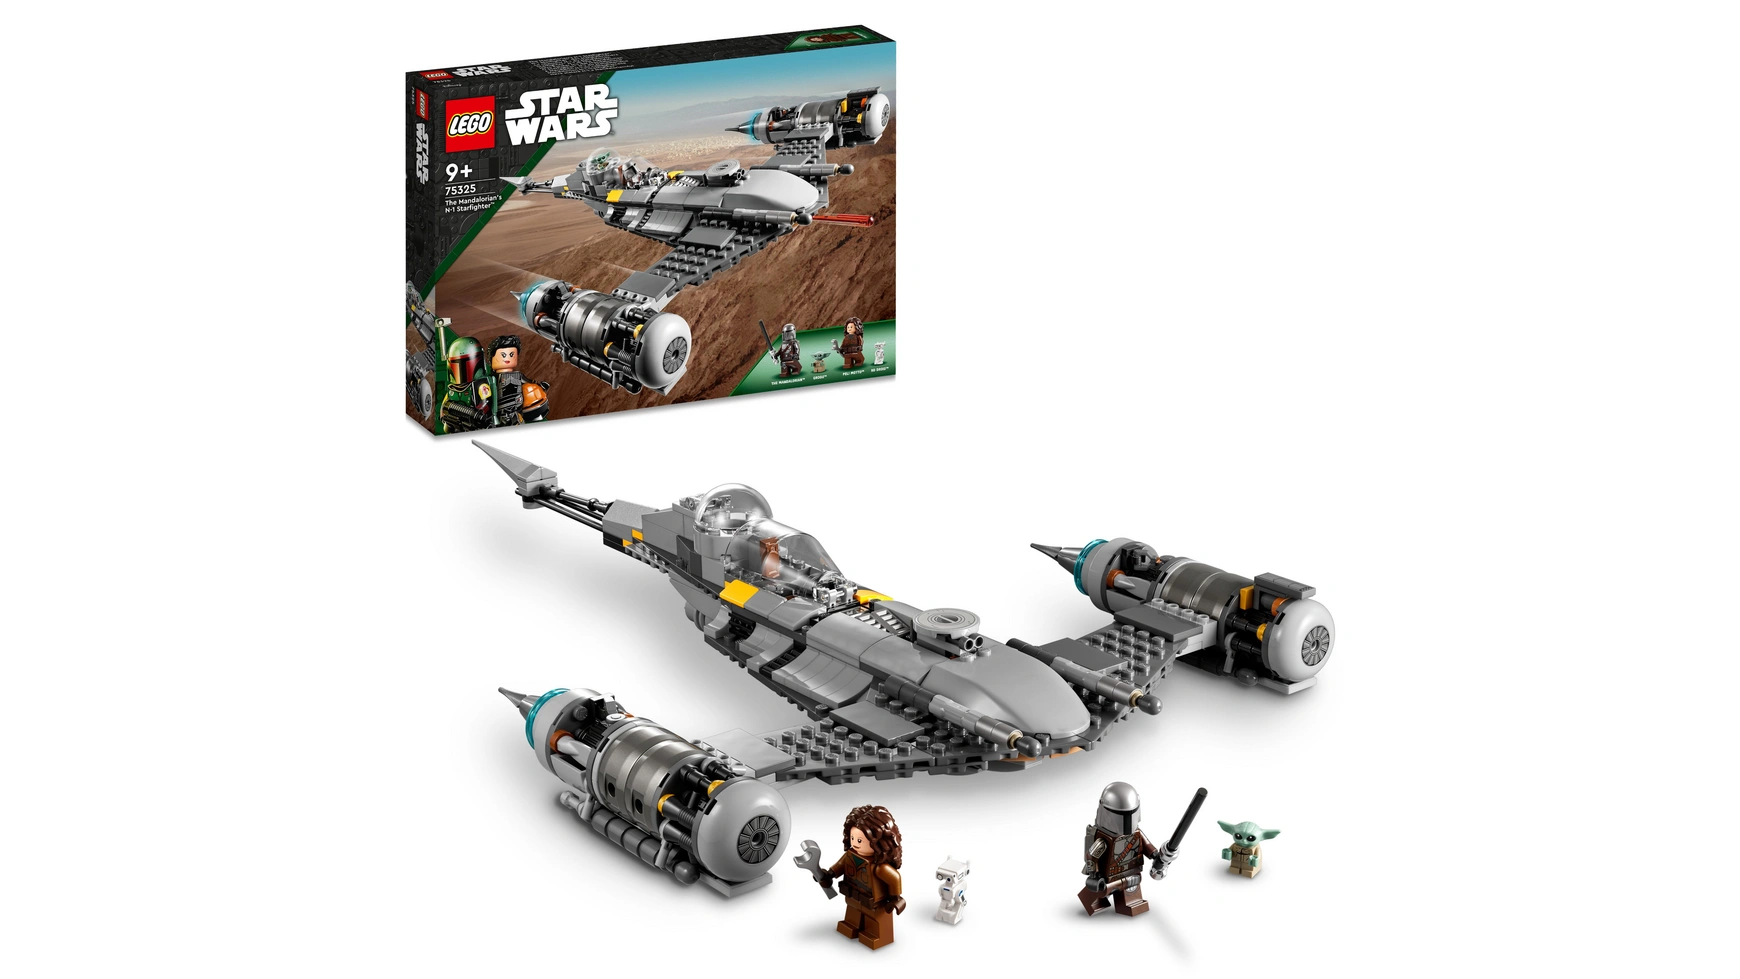 Lego Star Wars Набор Звездный истребитель Мандалорца Н-1 lego star wars 75316 звездный истребитель мандалорцев 544 дет